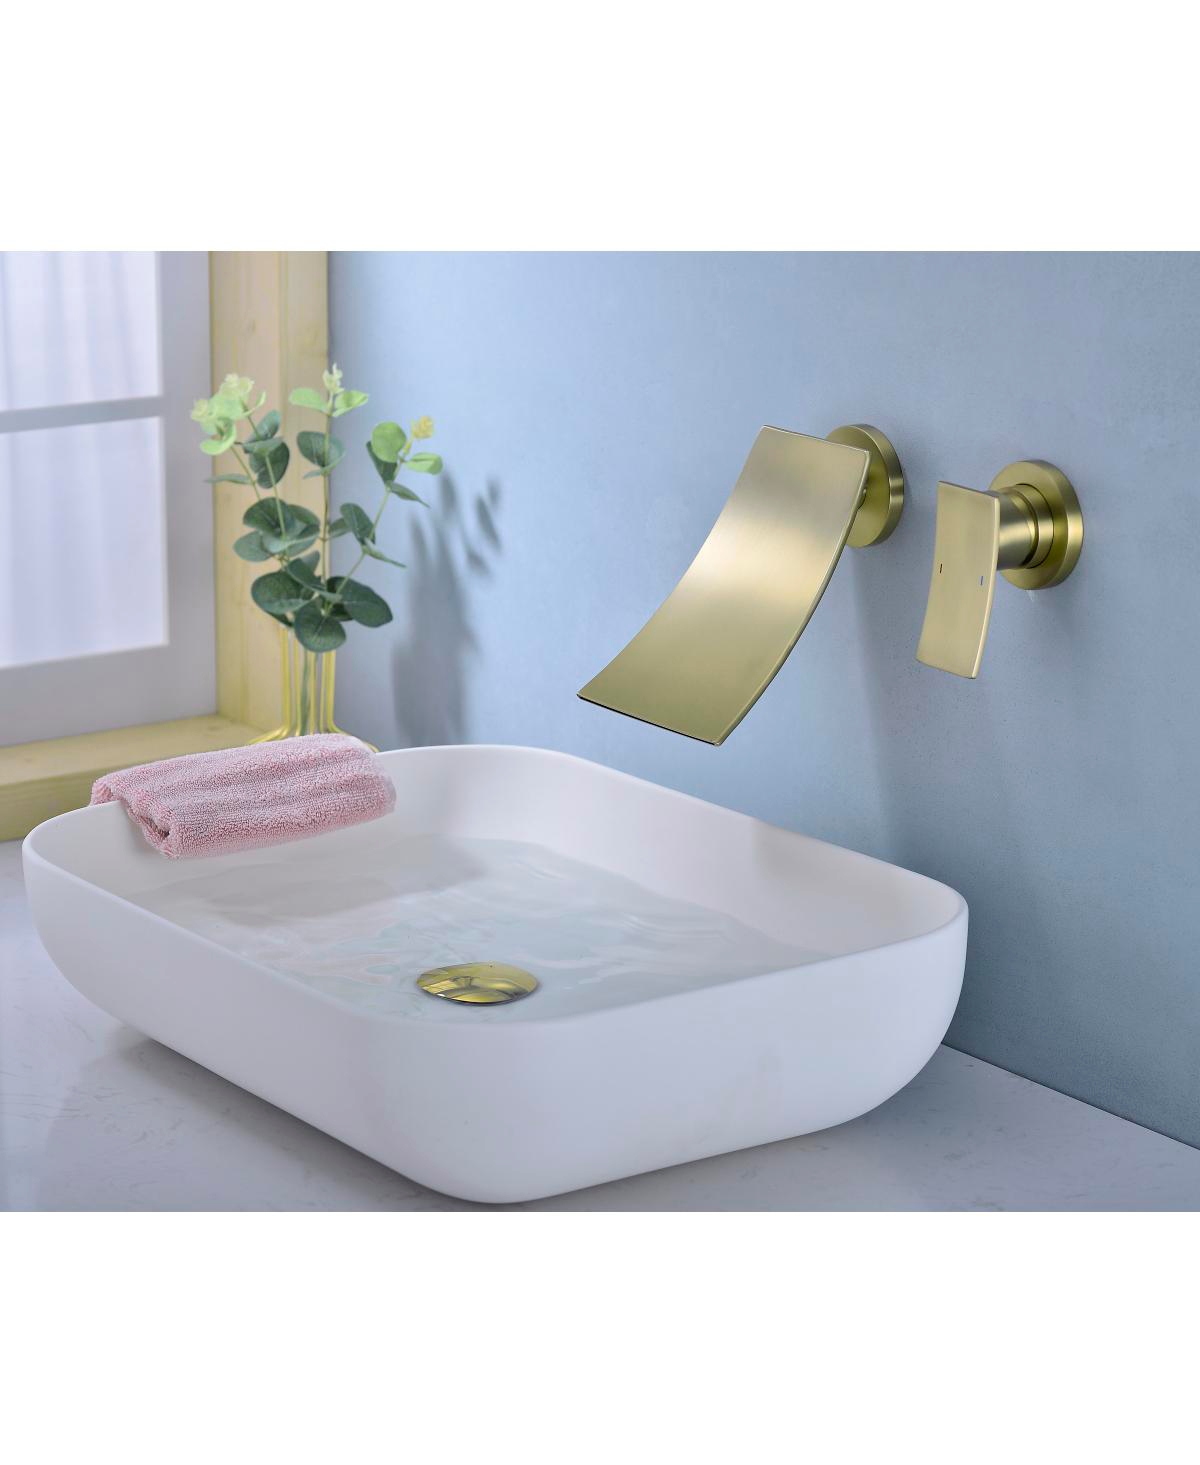 Wall Mount Widespread Bathroom Faucet - Gold